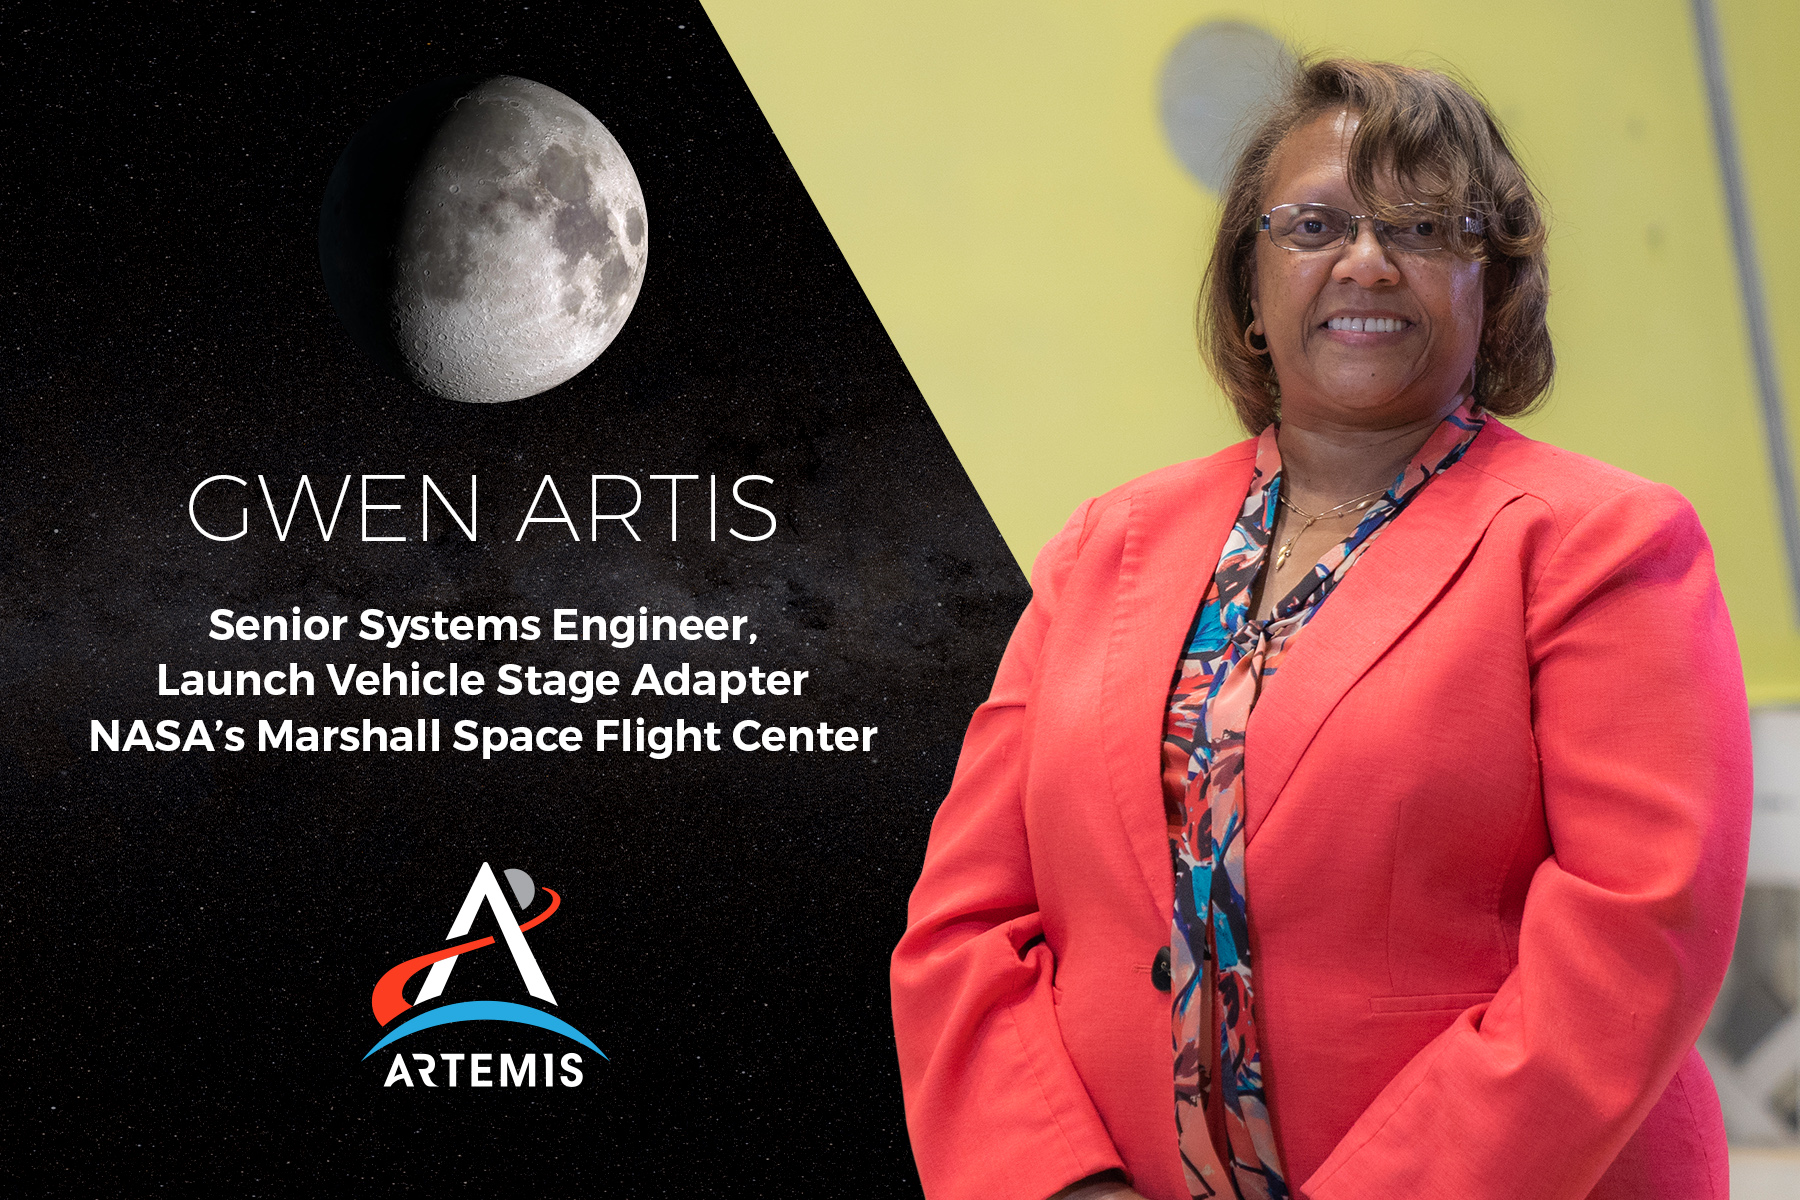 I am Artemis: Gwen Artis